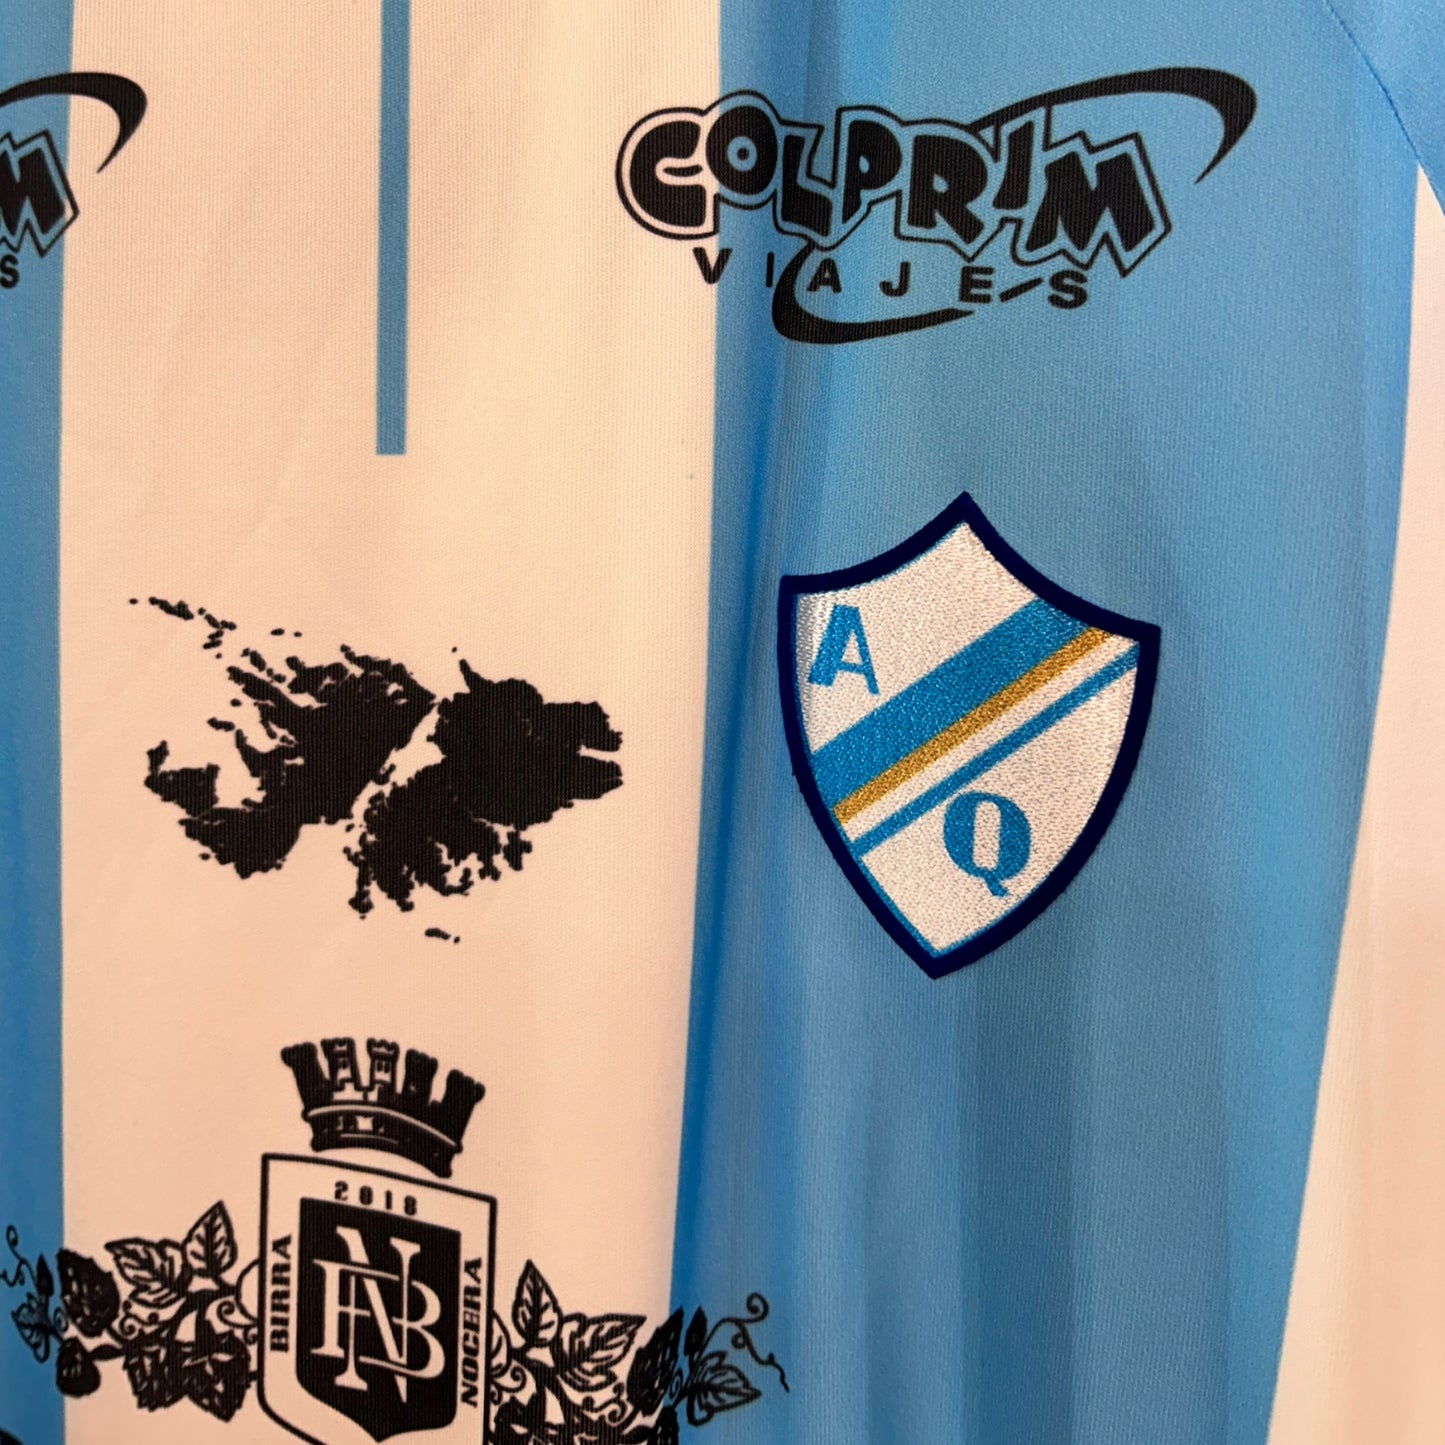 Argentino de Quilmes 2023 Home Shirt (Various Sizes)